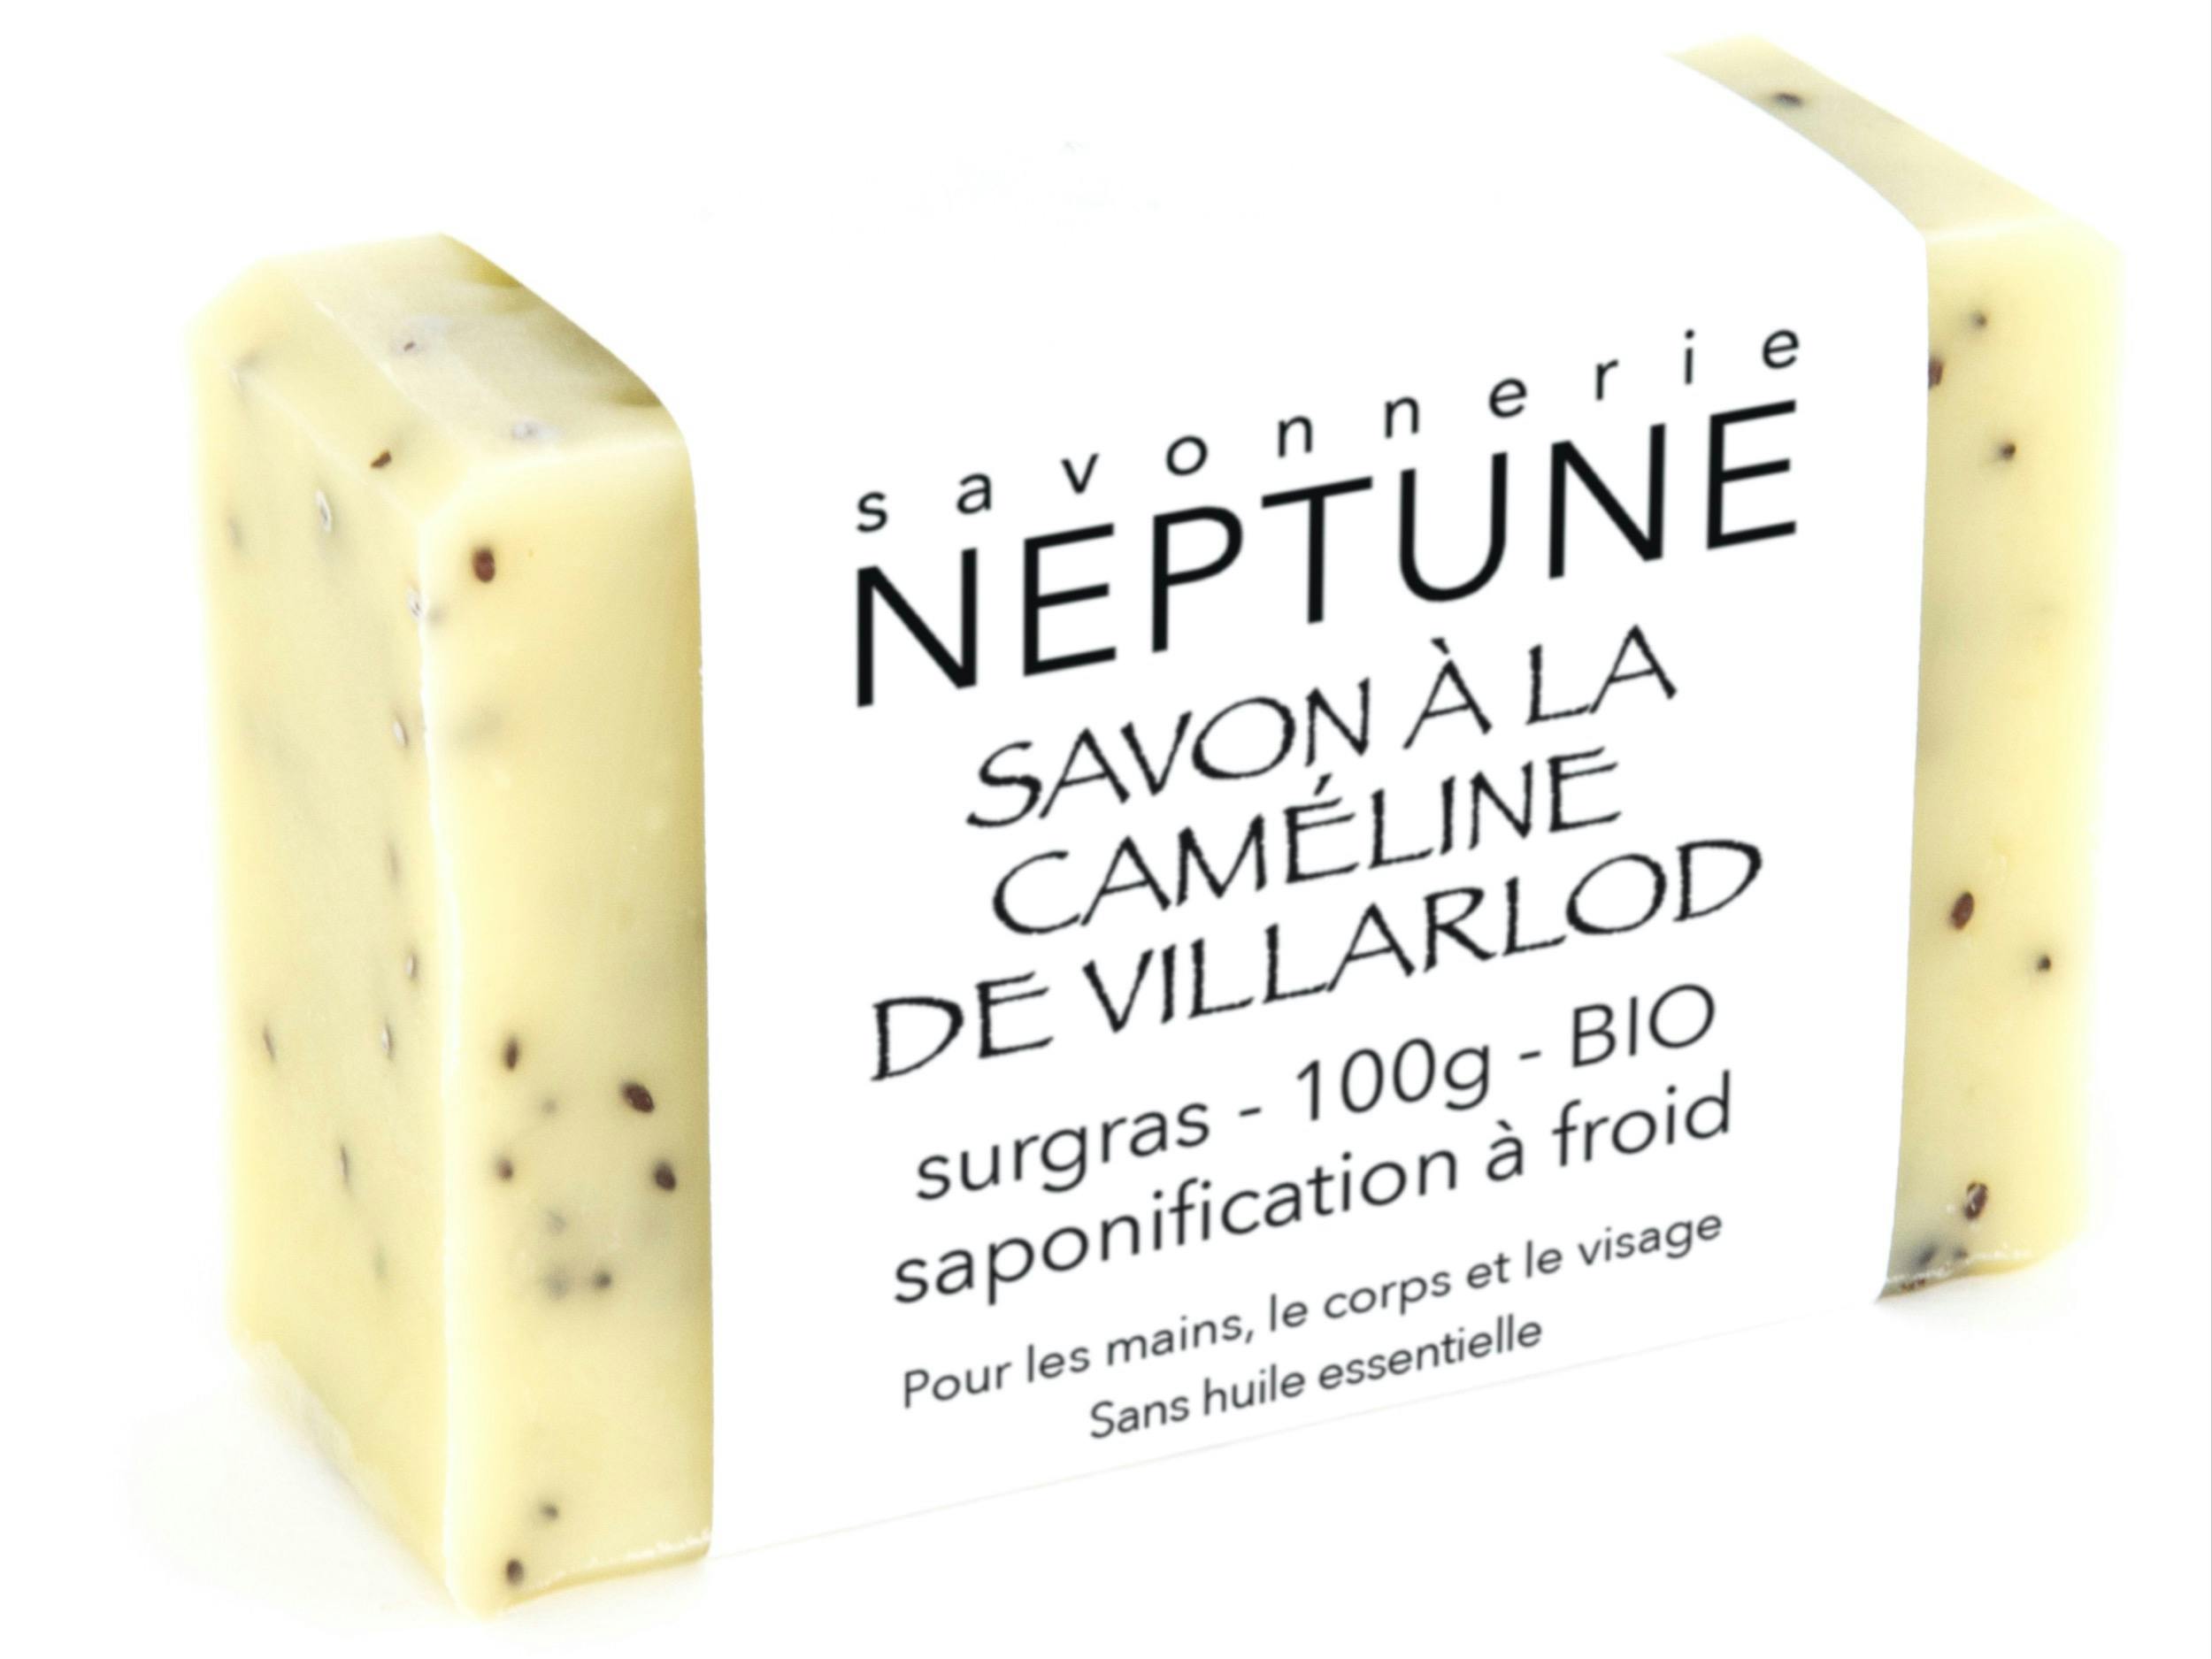 Camelina soap from Villarlod - organic image 2